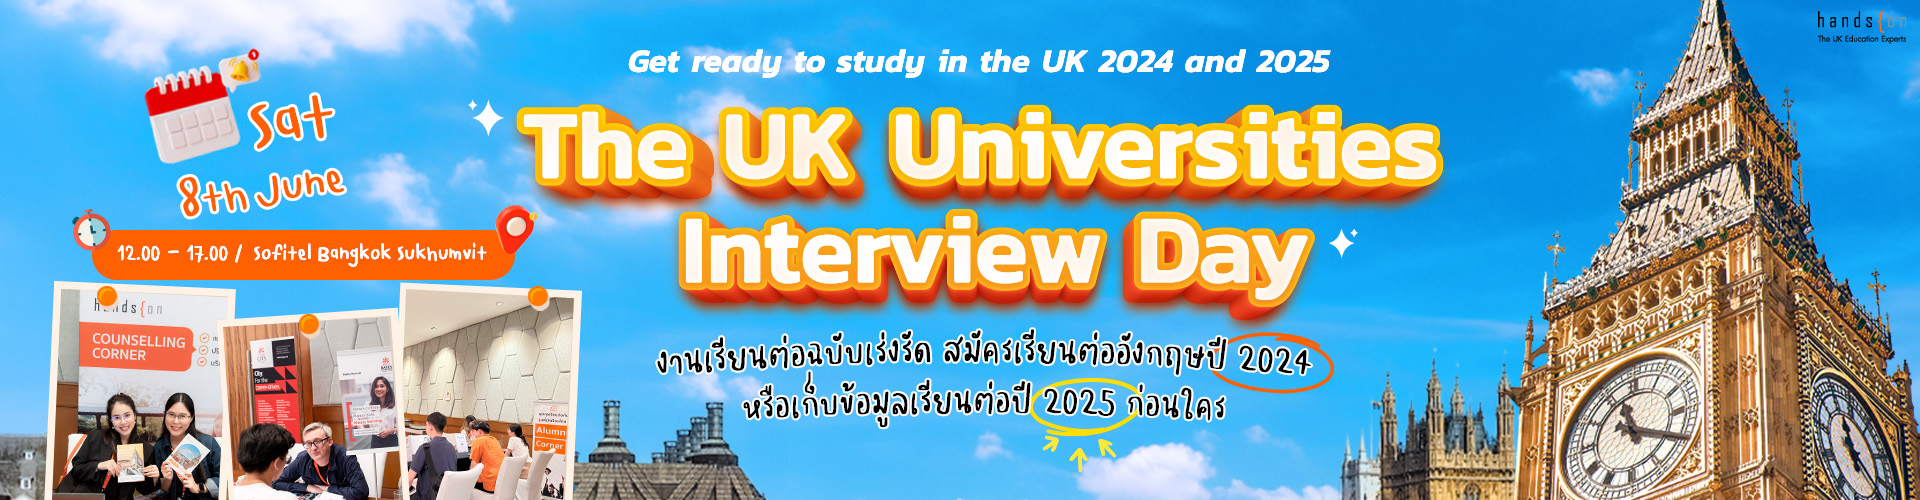 The UK Universities Interview Day